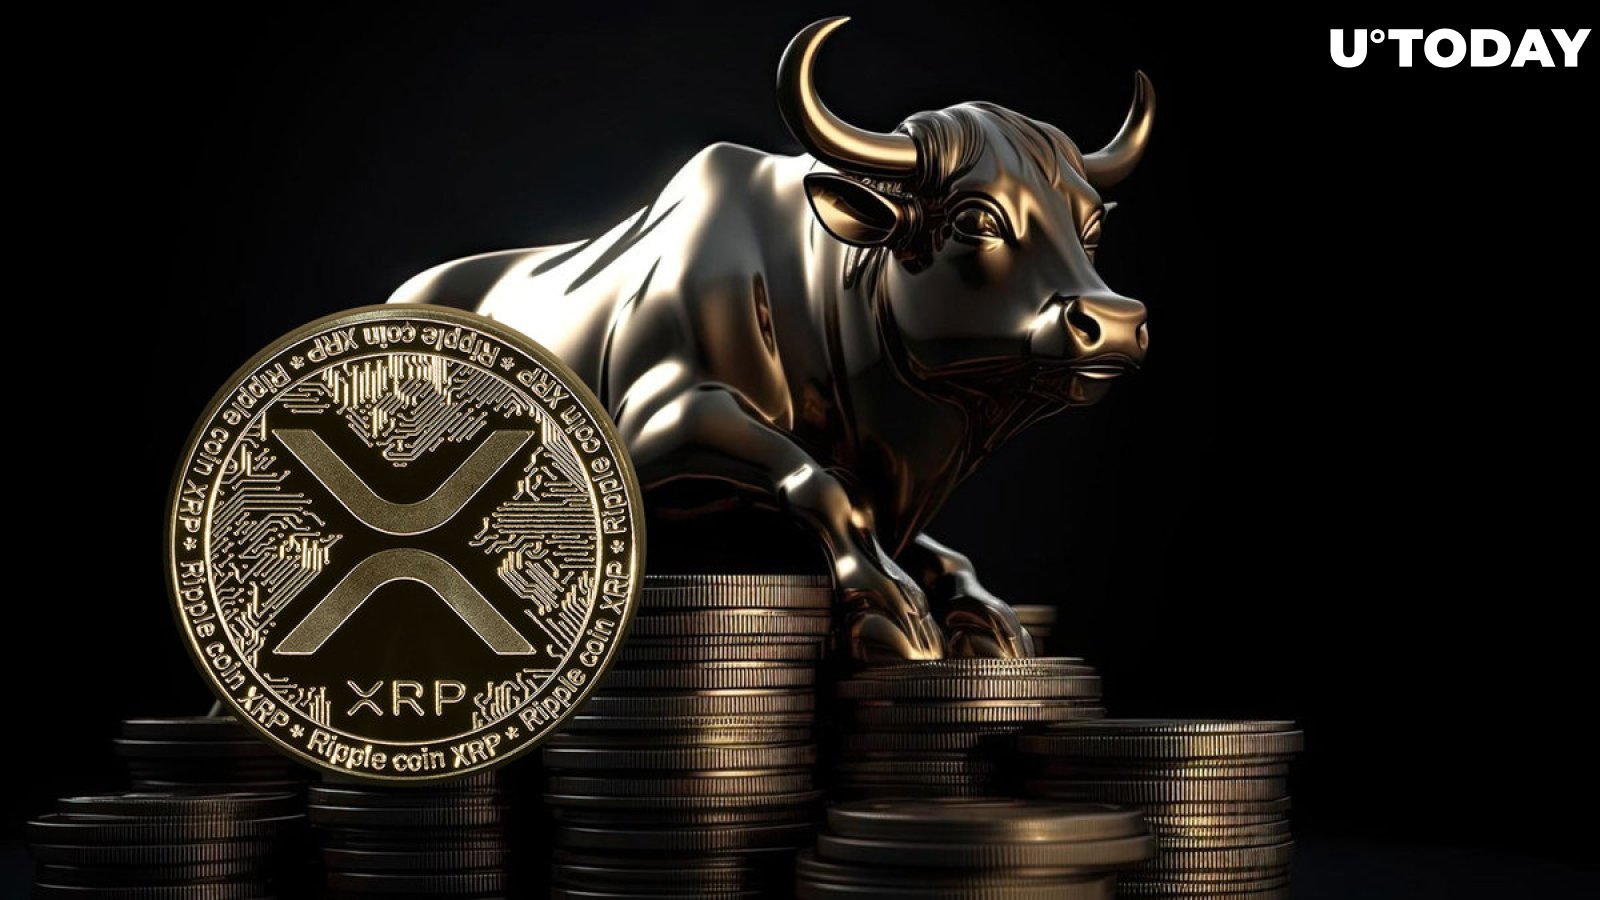 3x Long XRP Token USD (XRPBULL-USD) Price, Value, News & History - Yahoo Finance